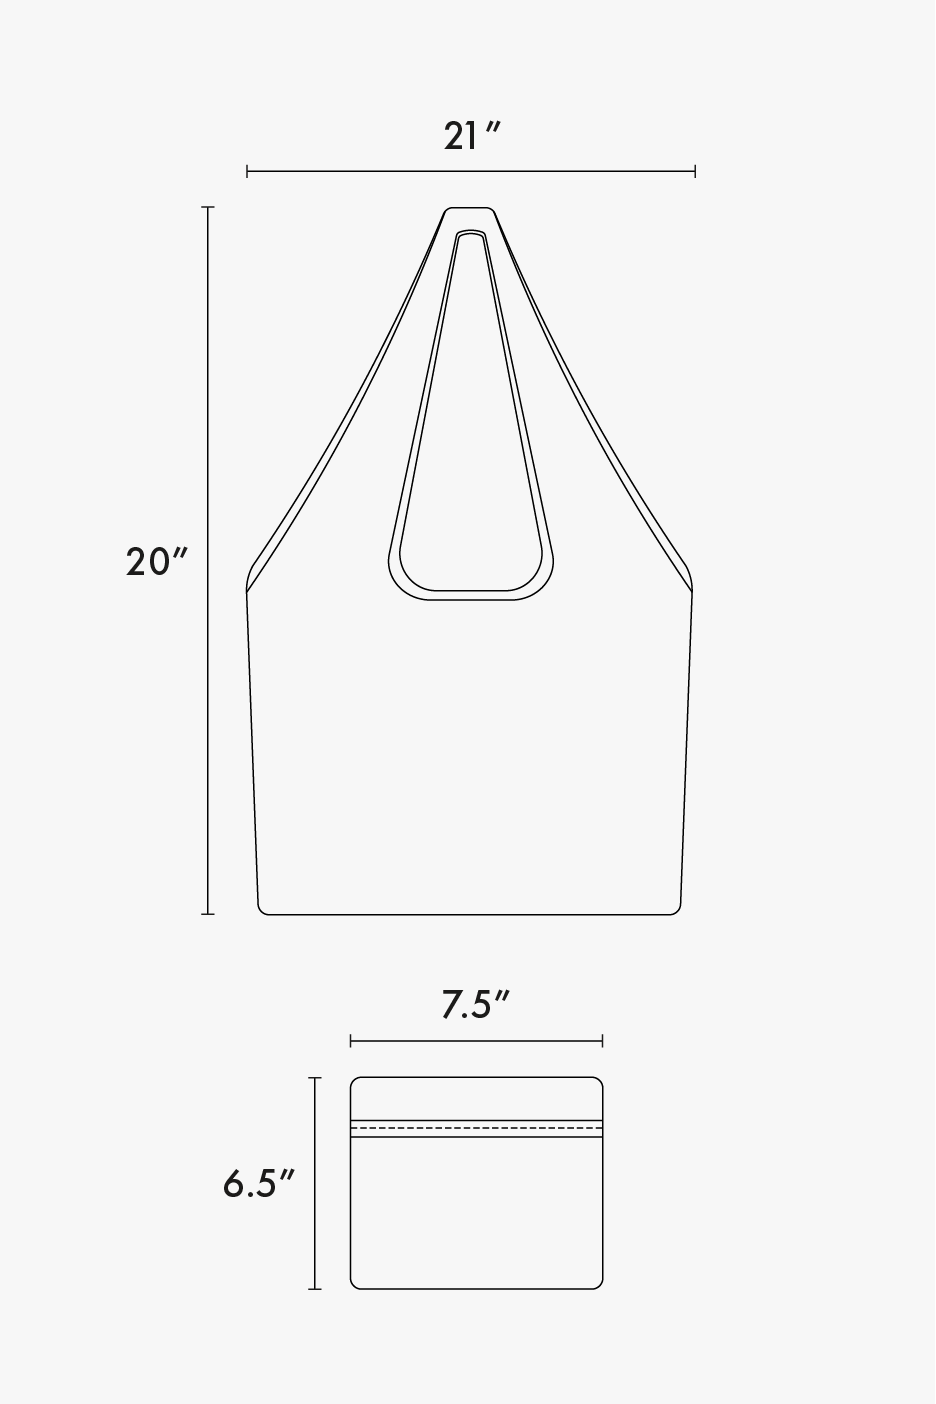 compakt tote bag dimensions